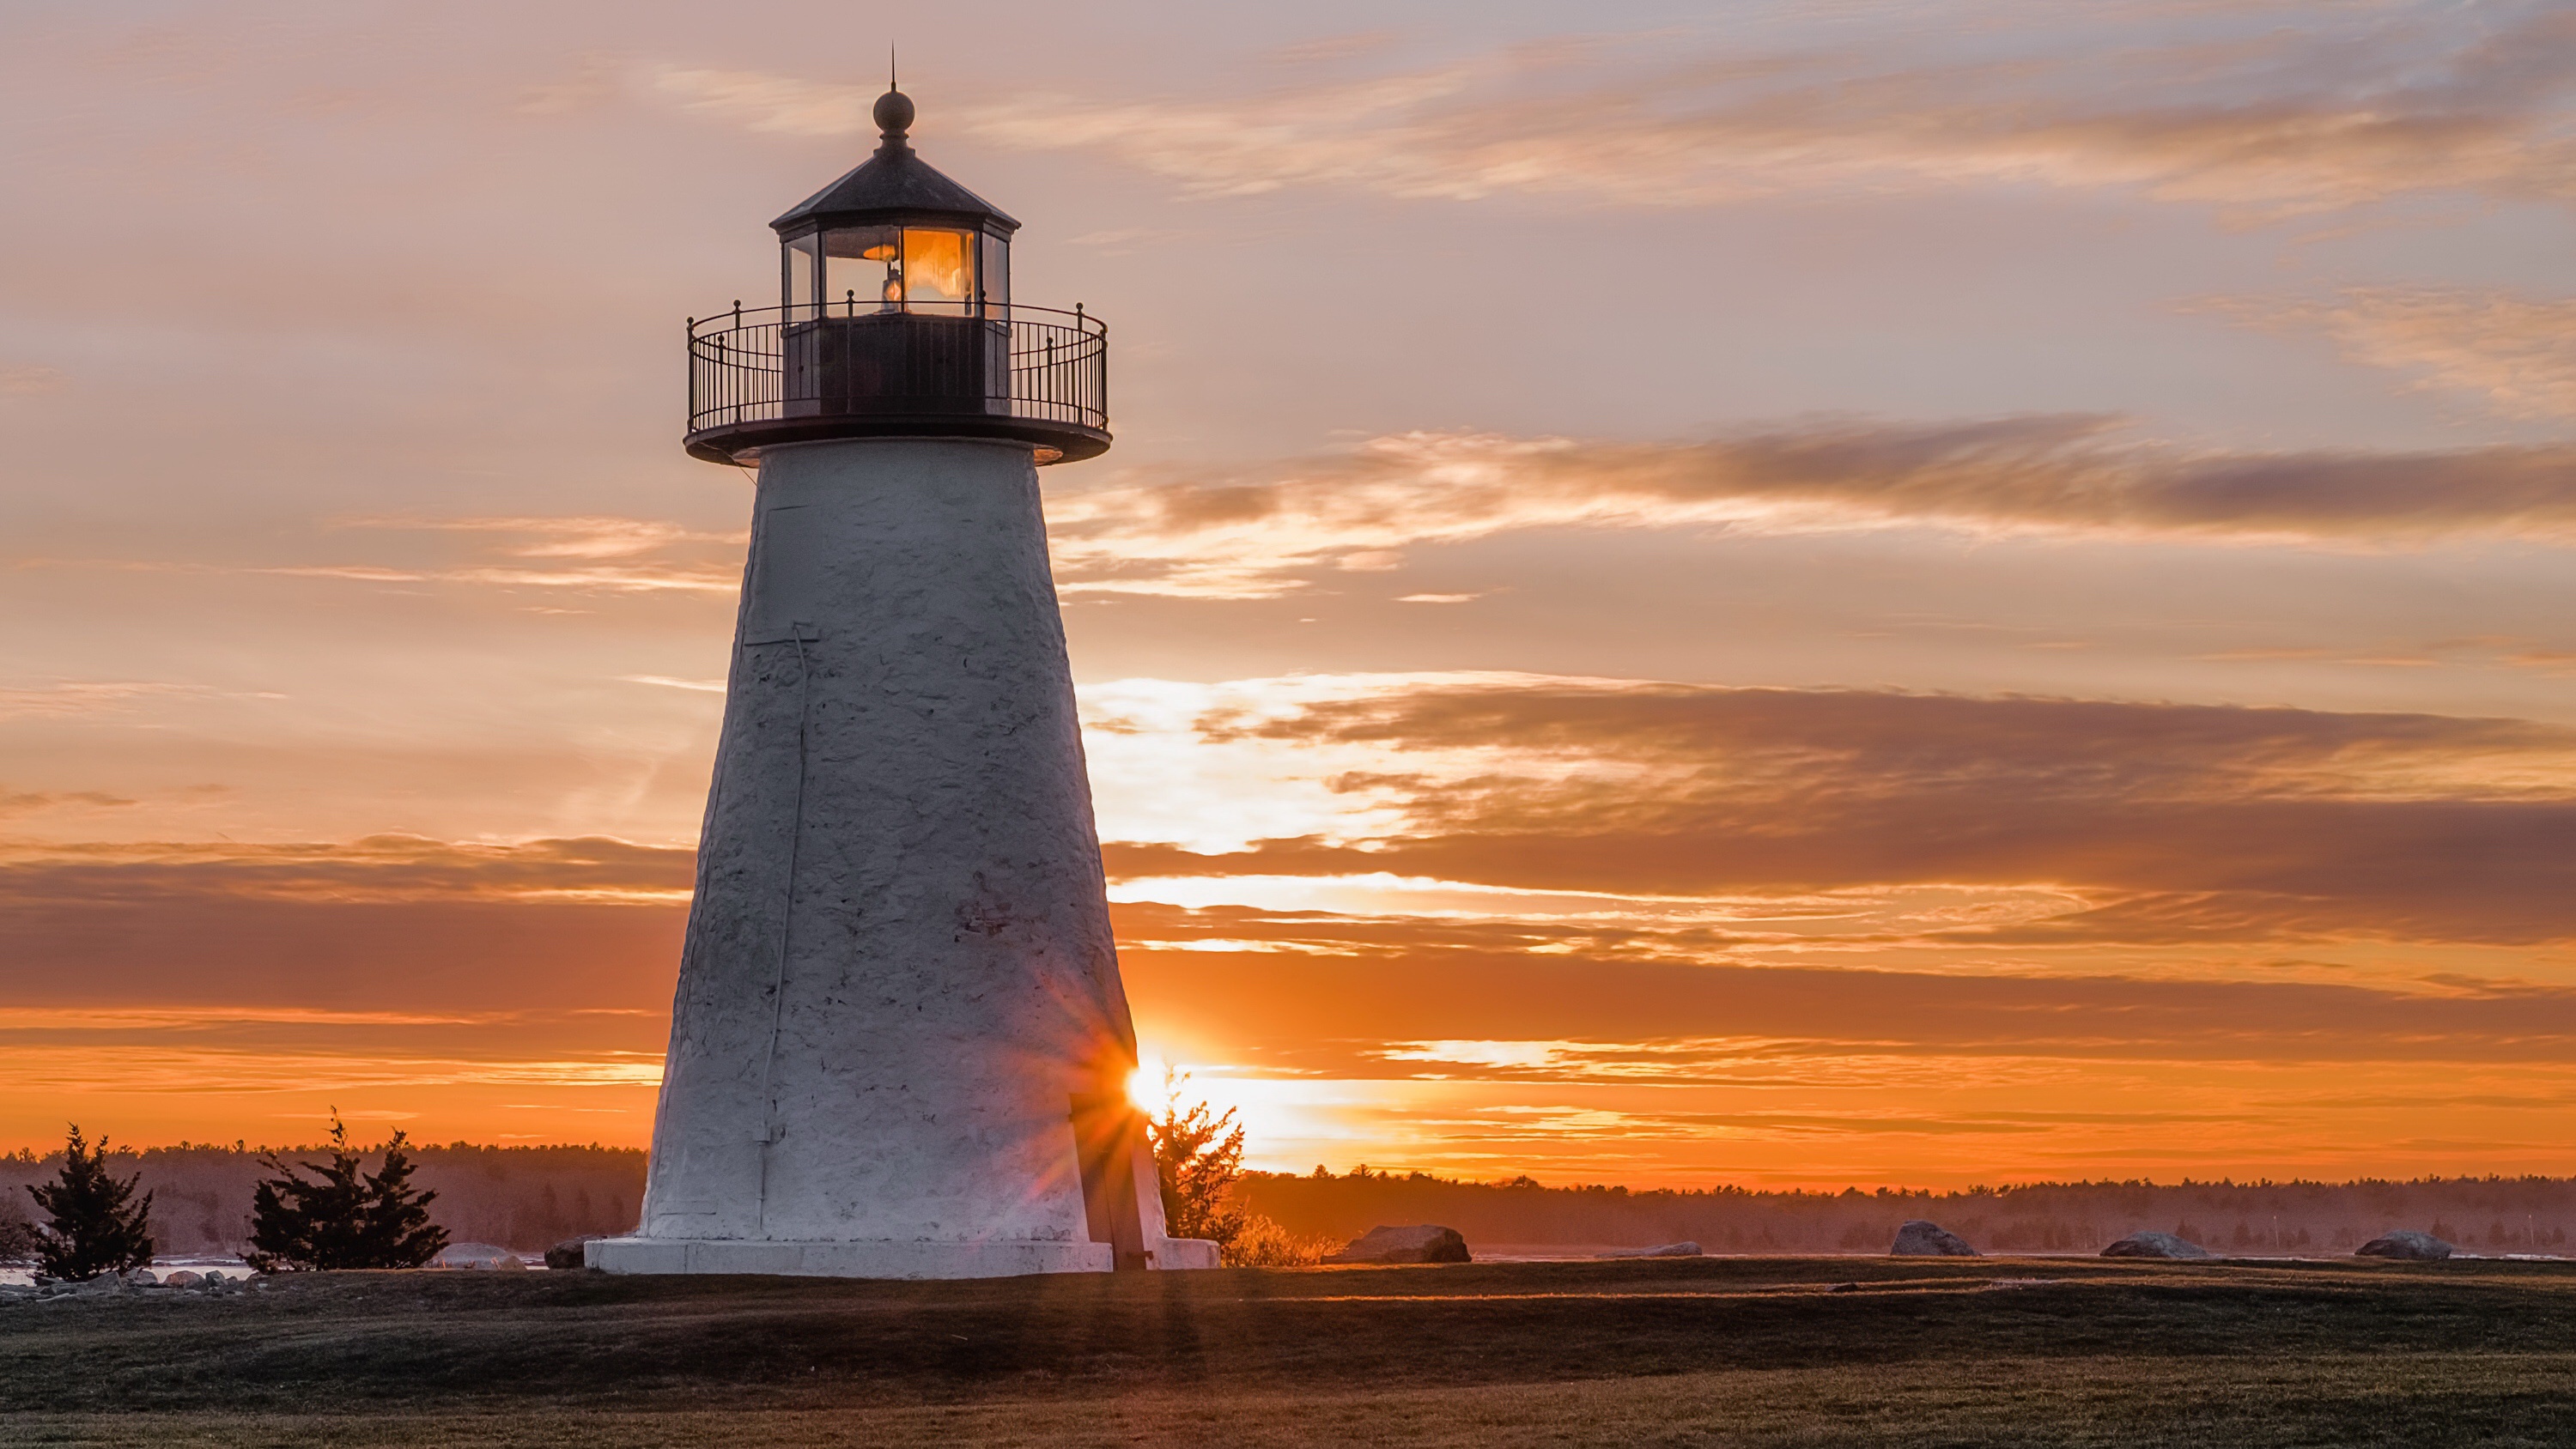 General 3000x1688 USA Massachusetts sky sunlight lighthouse